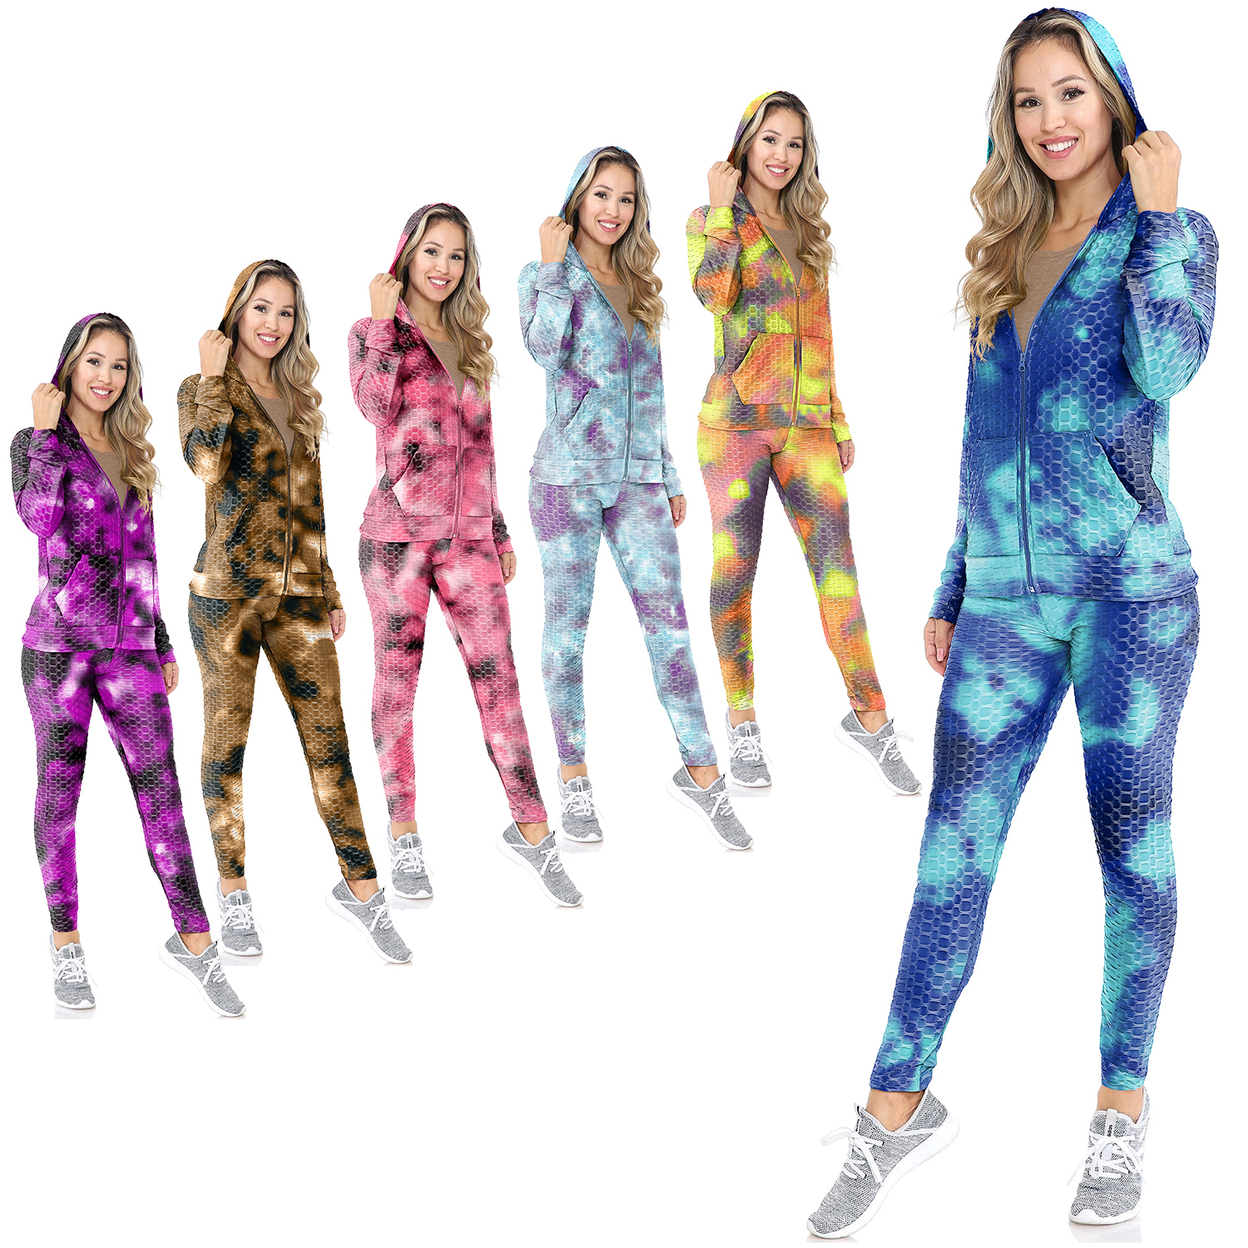 2-Set: Women's Athletic Anti-Cellulite Textured Tie Dye Body Contour Yoga Track Suit W/ Hood - Large, Solid